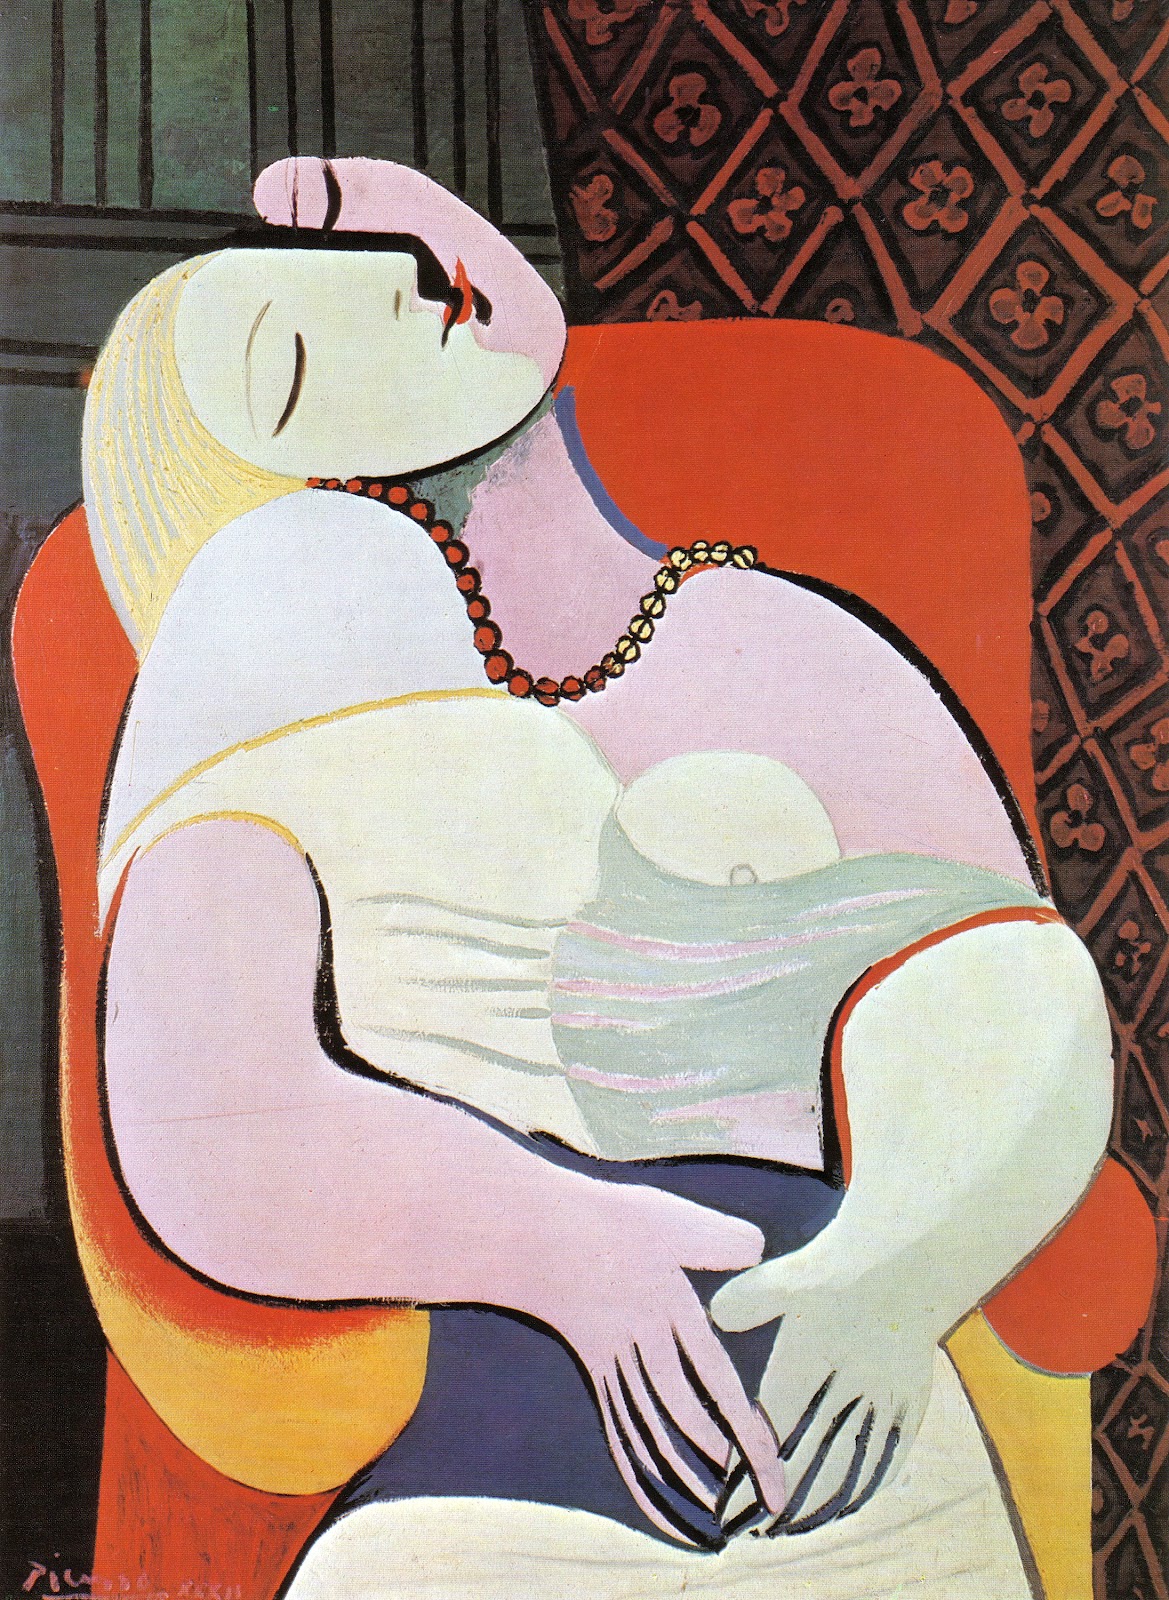 La Rêve (Der Traum) by Pablo Picasso - 1932 - 130 cm × 97 cm Private Sammlung